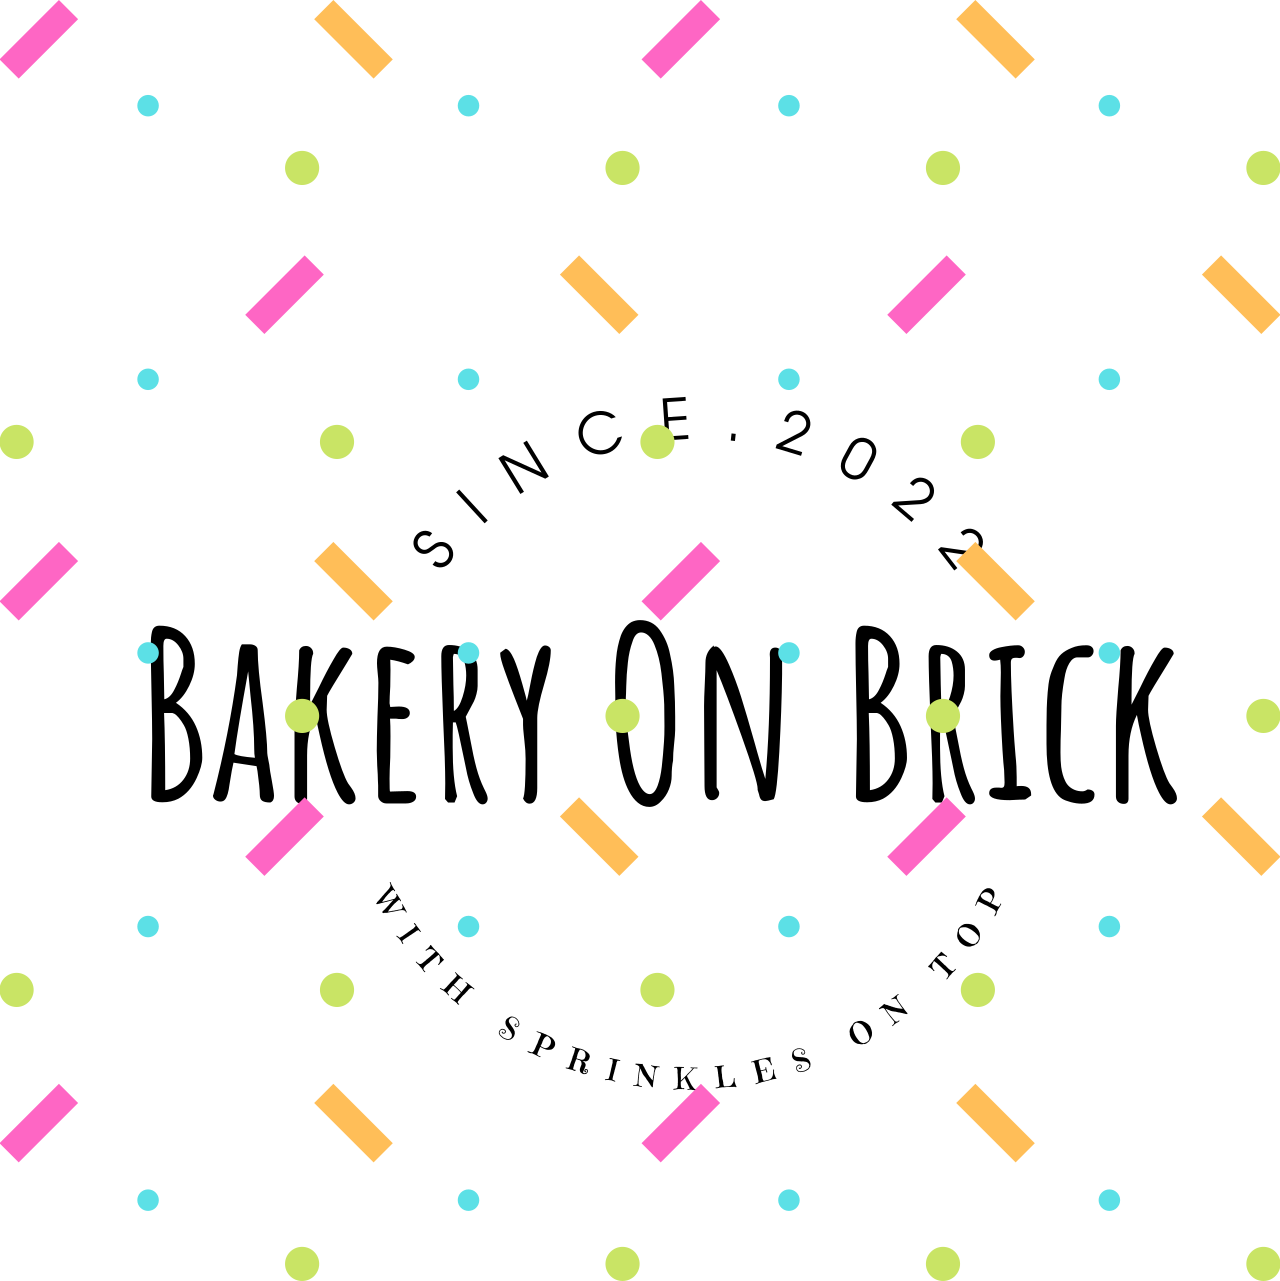 Bakery On Brick's logo